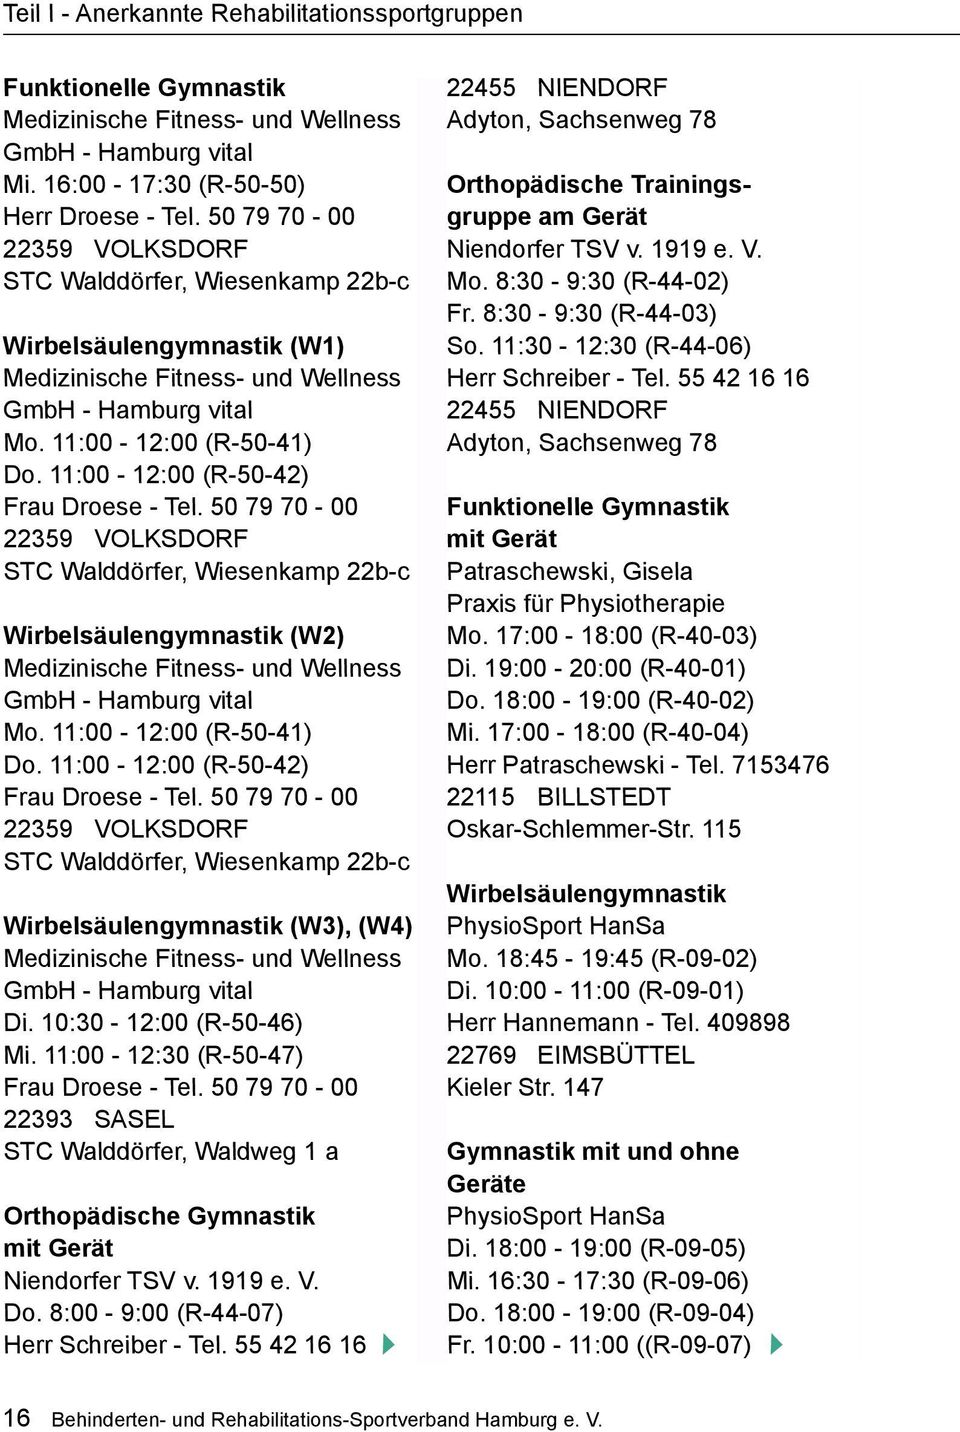 11:00-12:00 (R-50-42) Frau Droese - Tel. 50 79 70-00 22359 Volksdorf STC Walddörfer, Wiesenkamp 22b-c Wirbelsäulengymnastik (W2) Medizinische Fitness- und Wellness GmbH - Hamburg vital Mo.